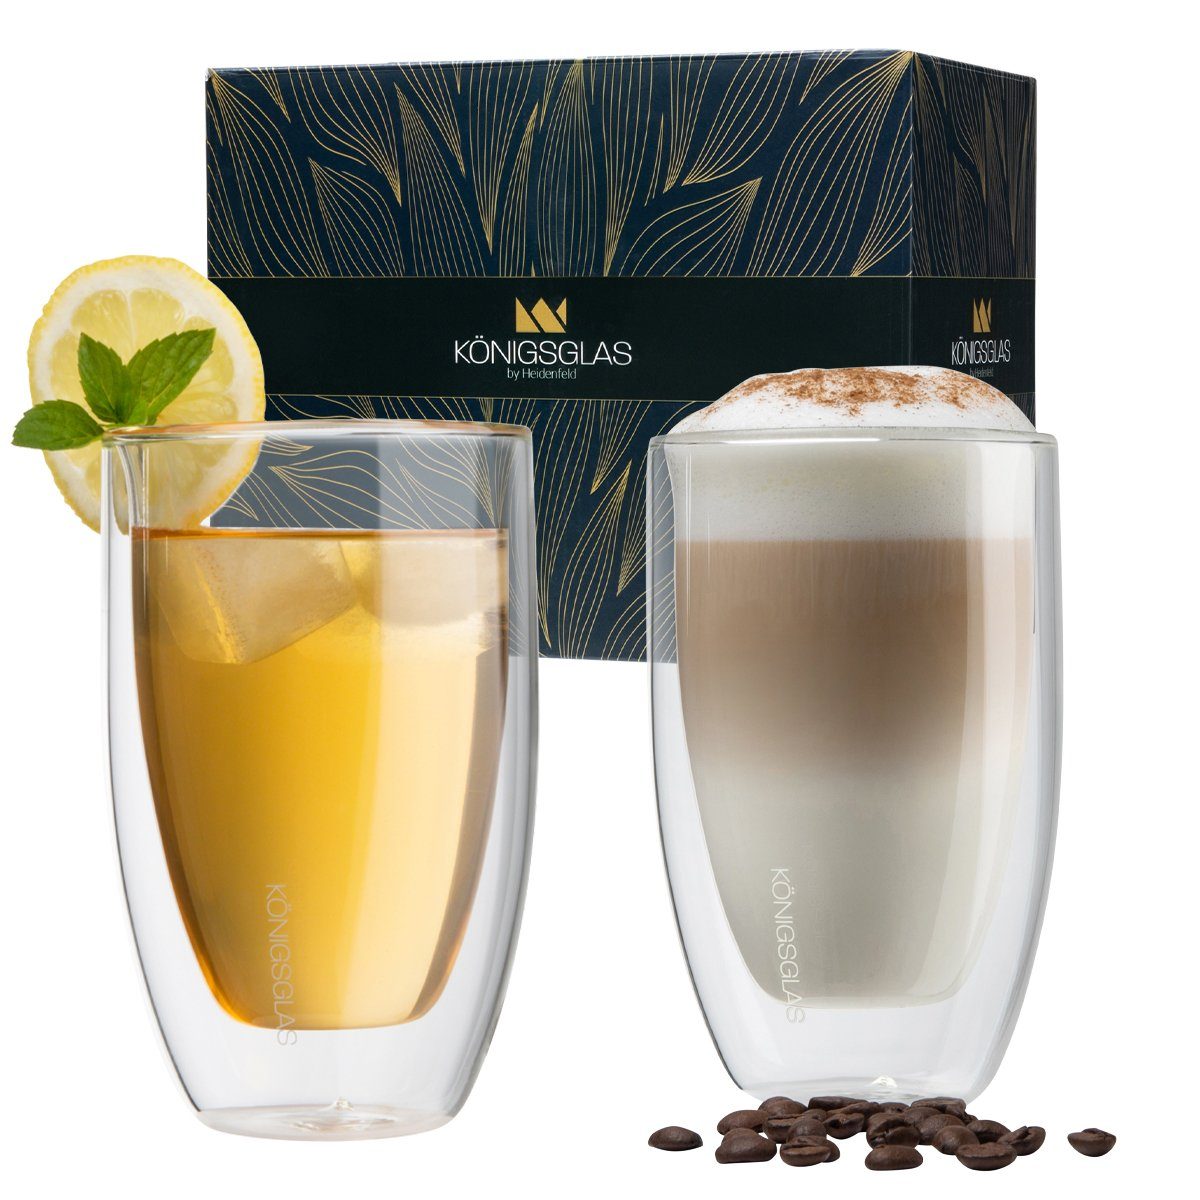 Königsglas Latte-Macchiato-Glas Latte Macchiato Glas 300 ml Cappuccino Стекло-Set doppelwandig, Kaffeetasse, 2/4er Glas Set Trinkglas Thermoglas Kaffee Teeglas Кофейные стаканы Tasse